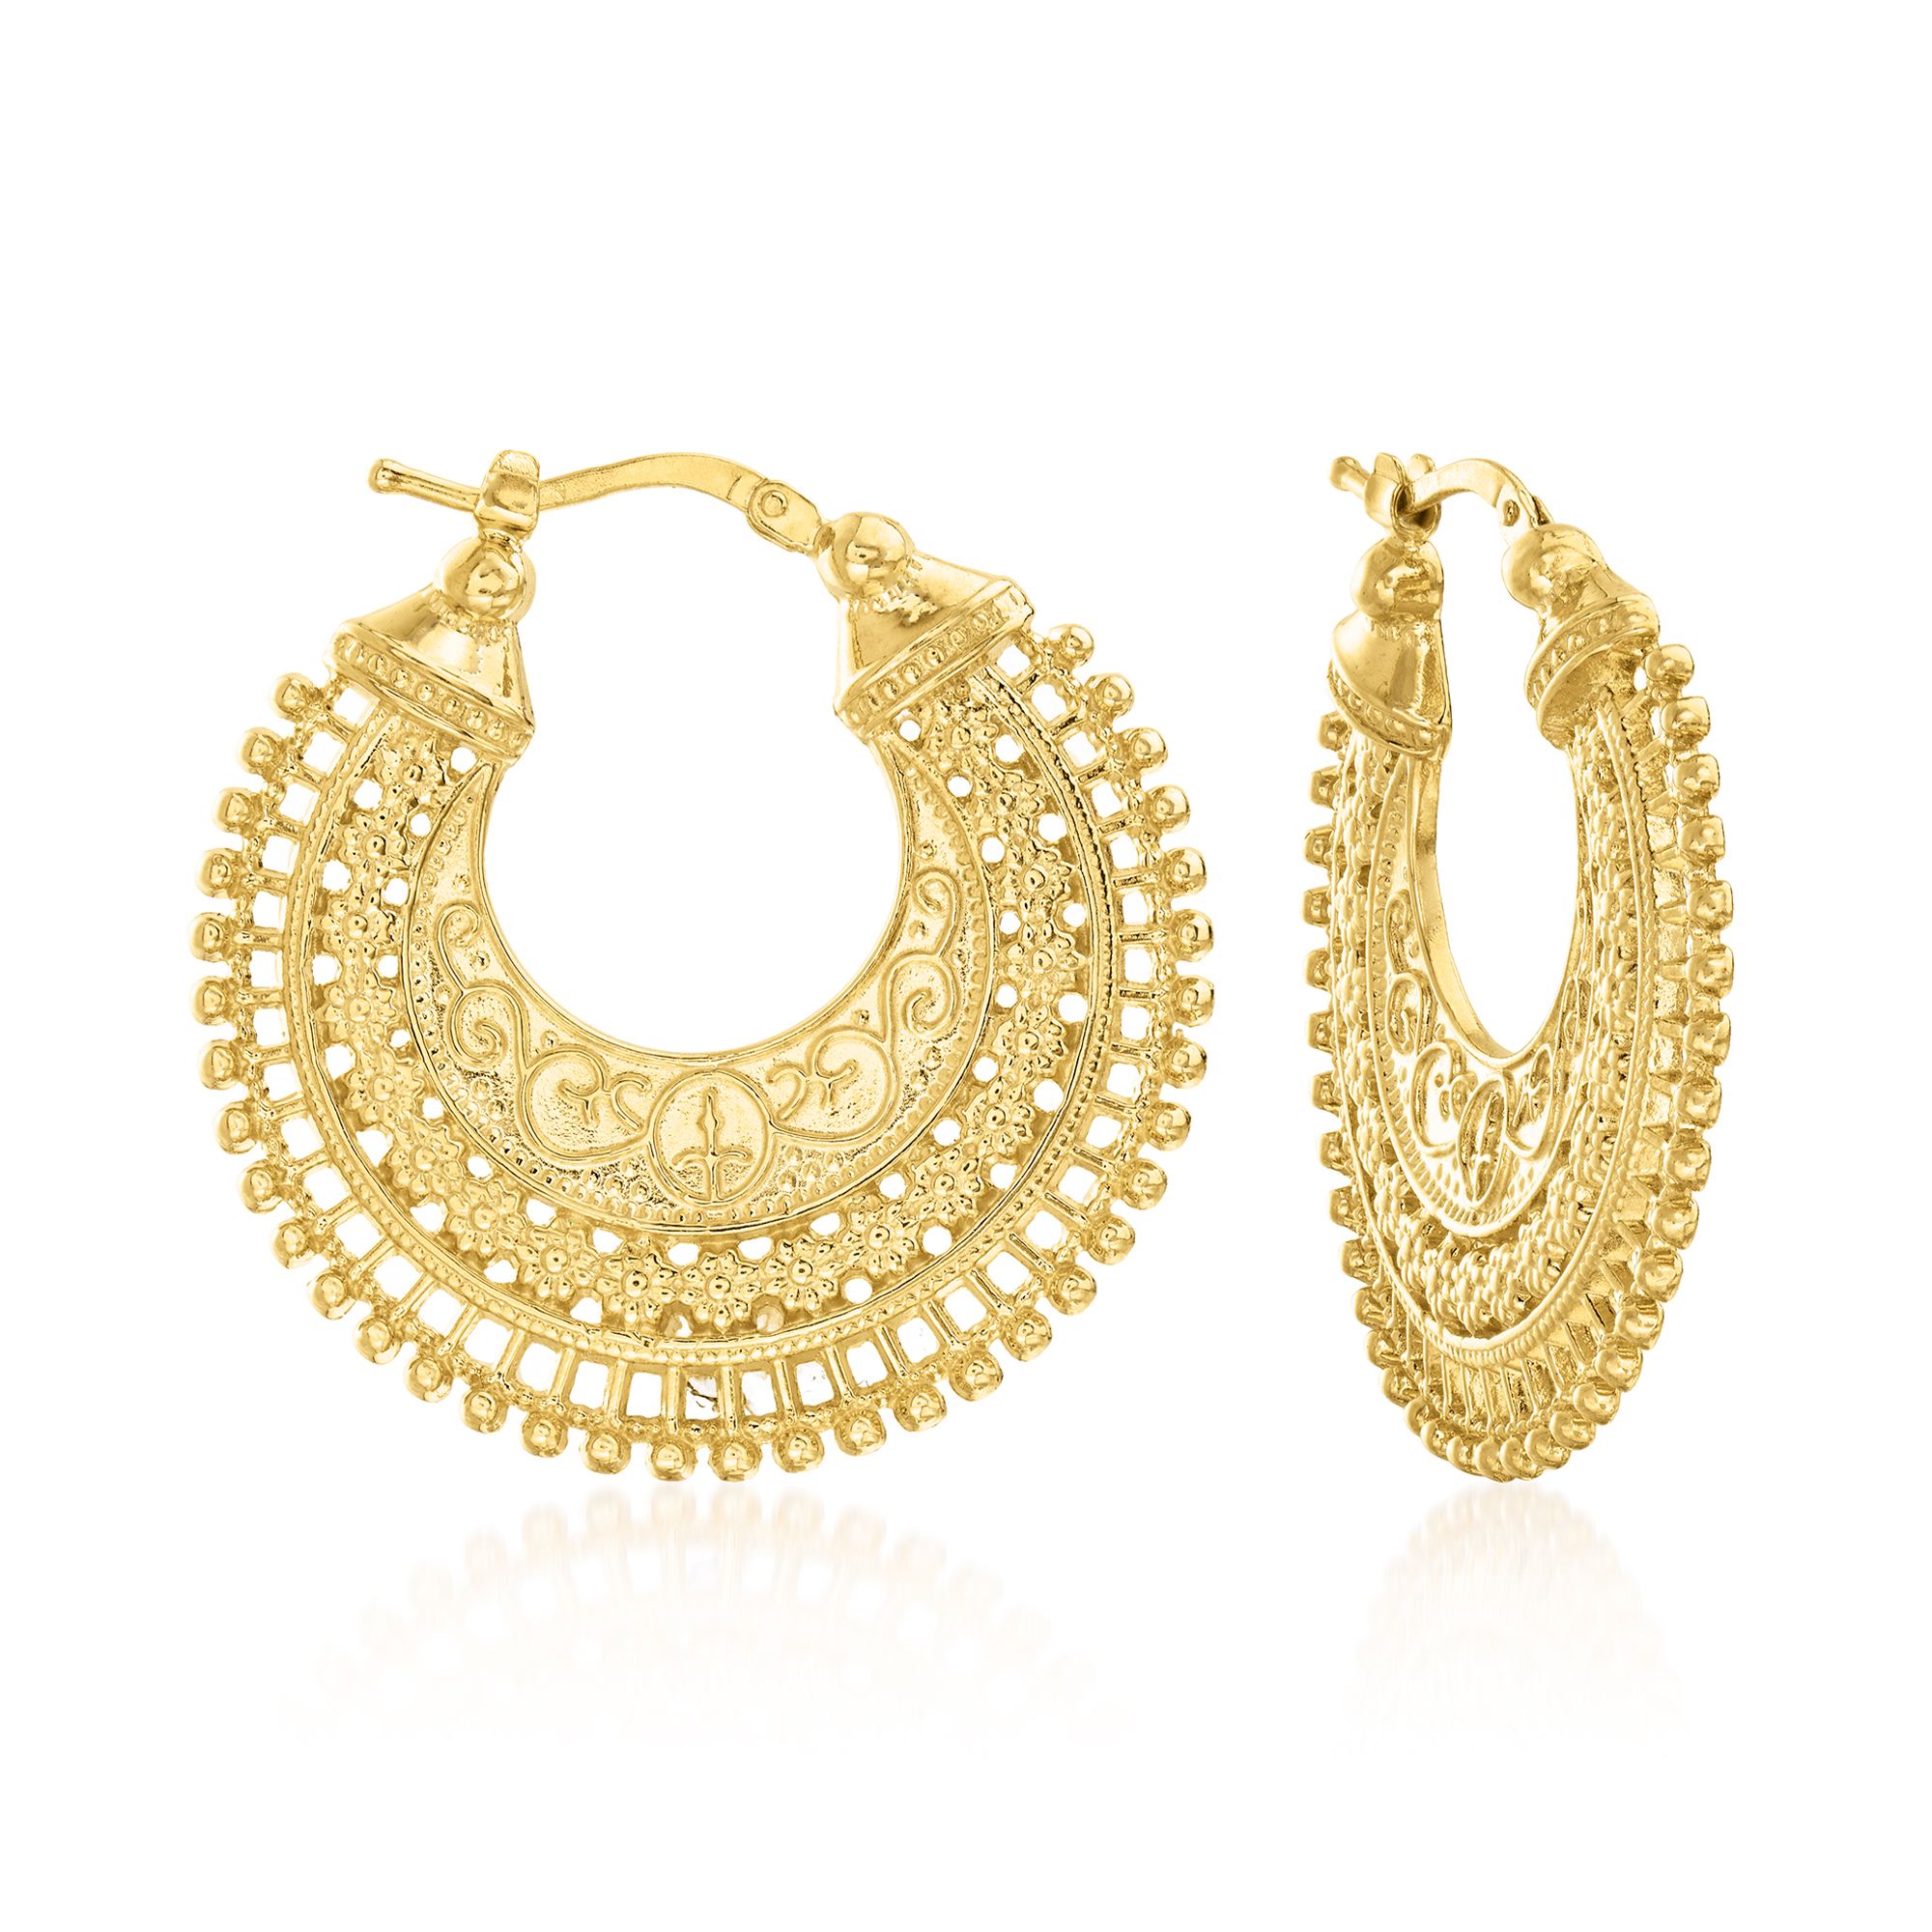 Italian 18kt Gold Over Sterling Embellished Hoop Earrings. 1 3/8 